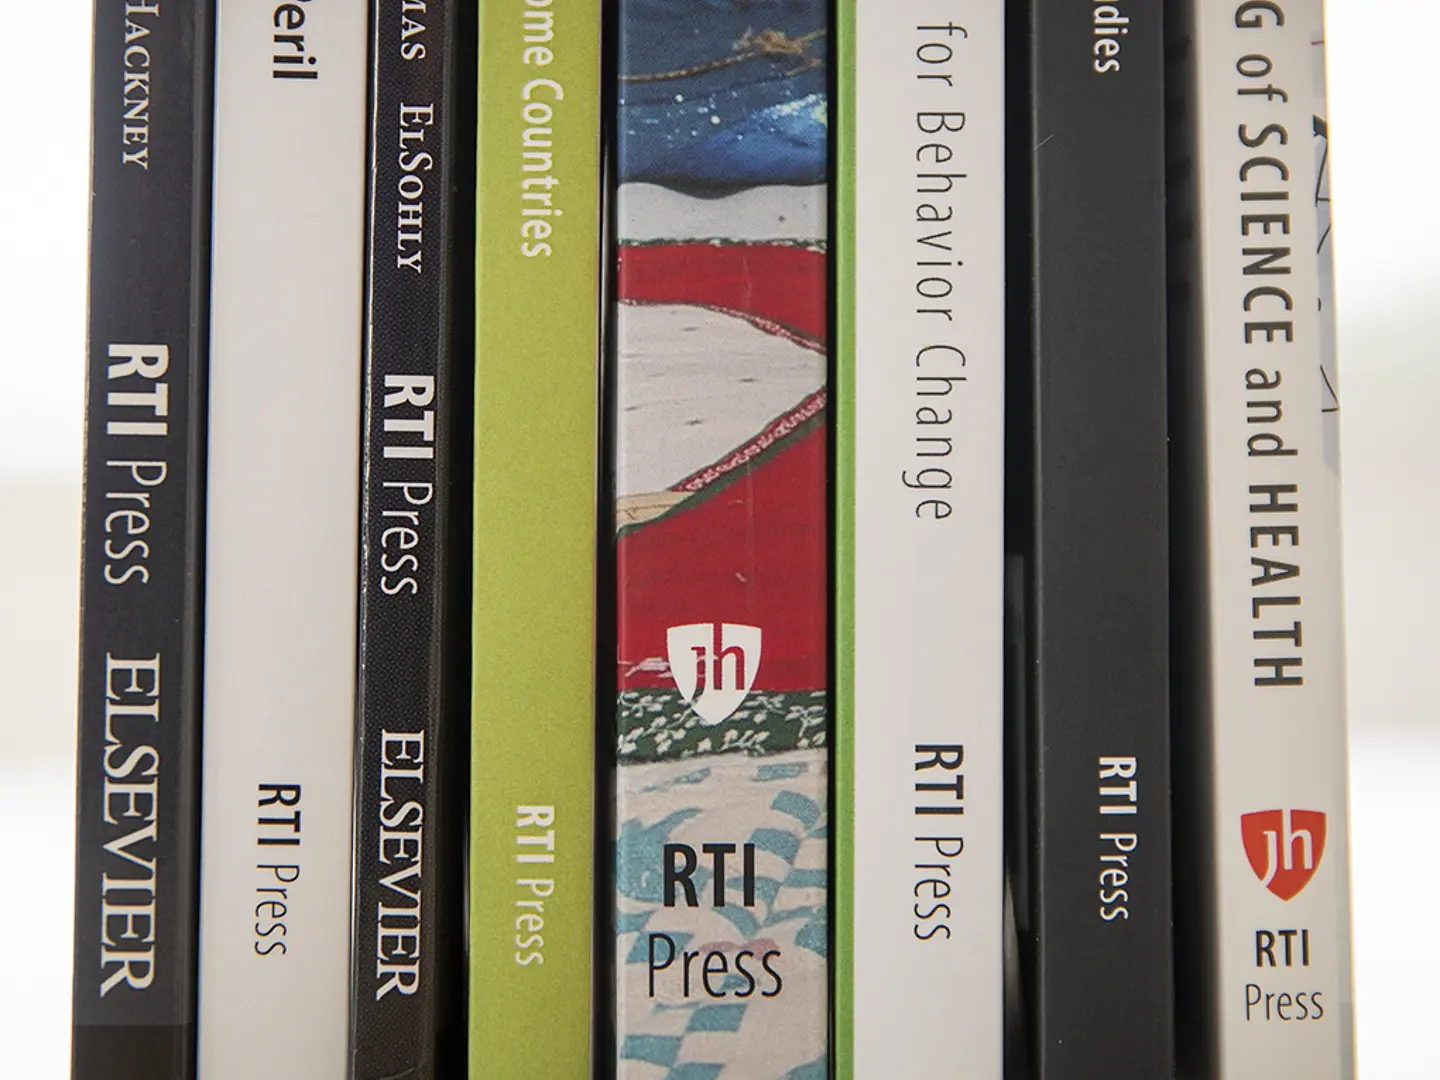 A selection of RTI Press books, shown on a shelf.